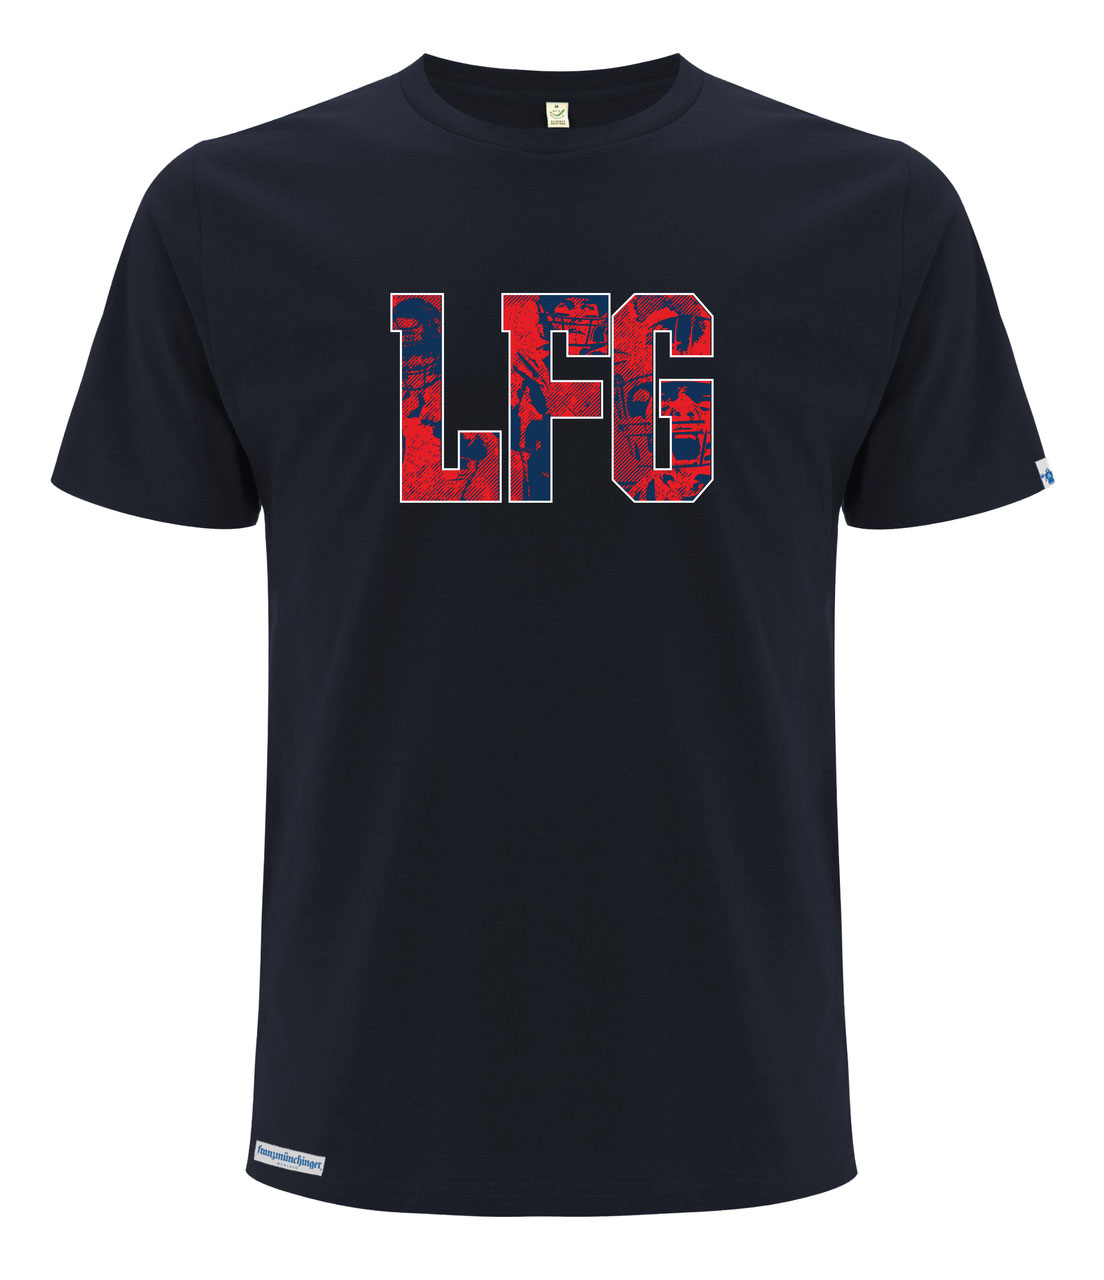 LFG Shirt